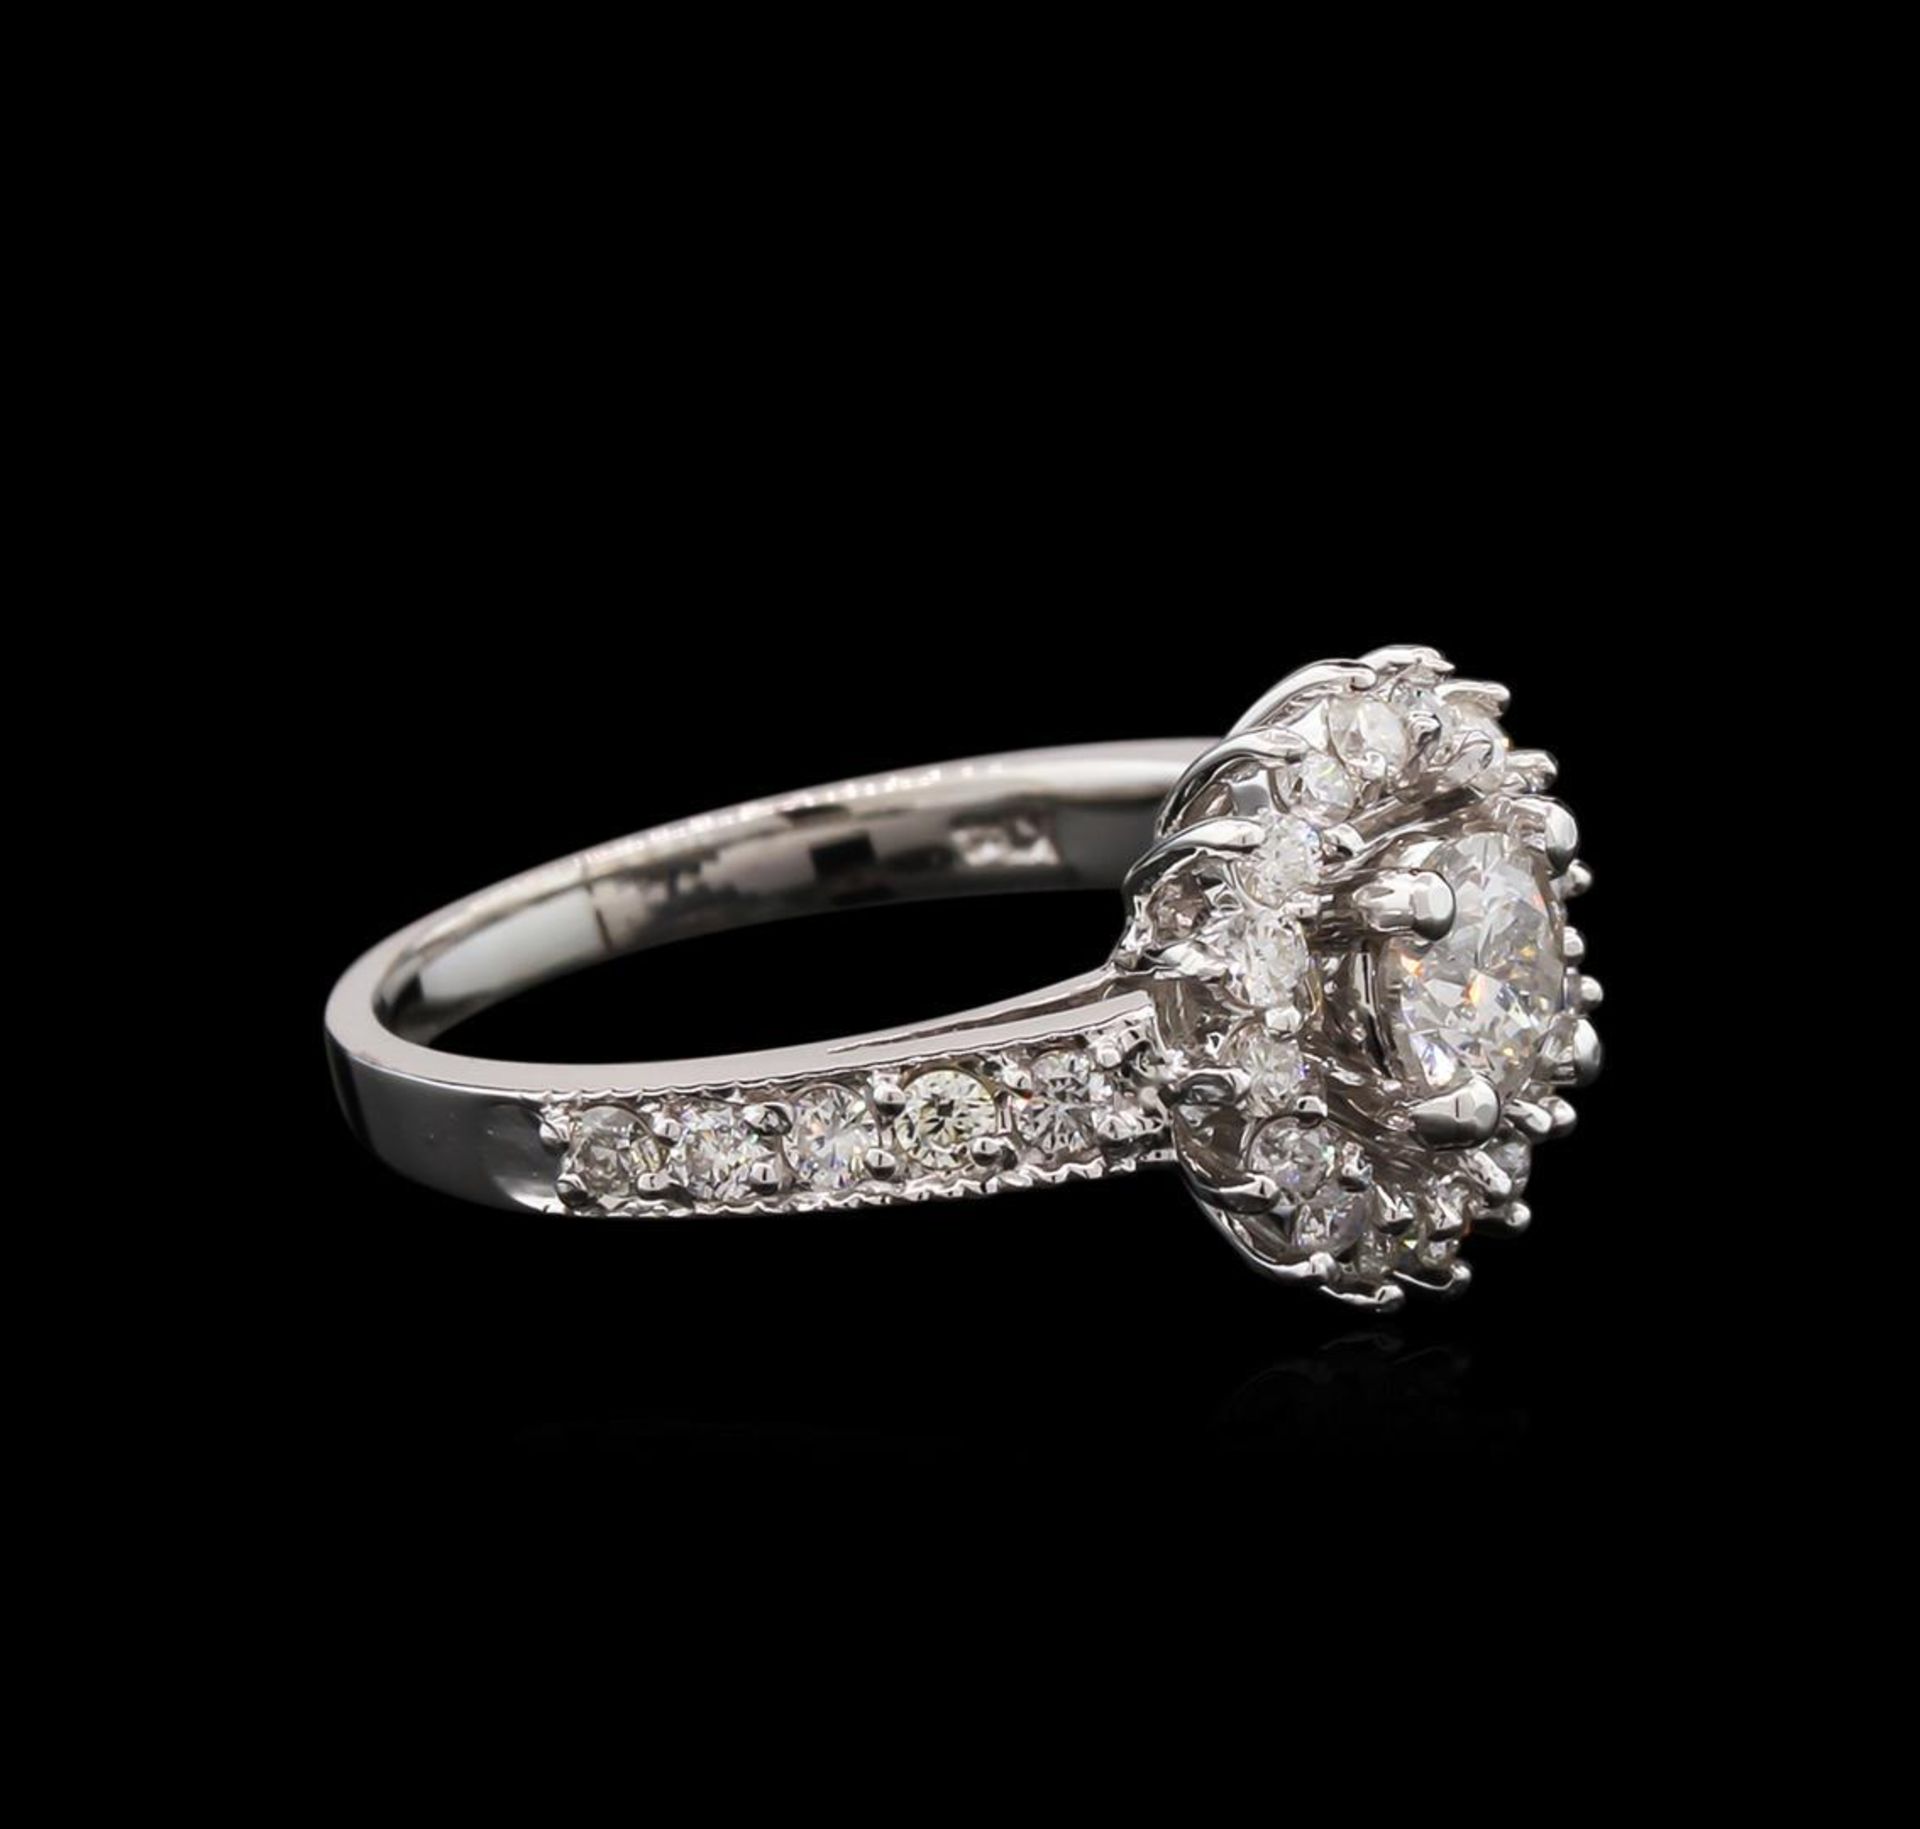 1.04ctw Diamond Ring - 14KT White Gold - Image 2 of 3